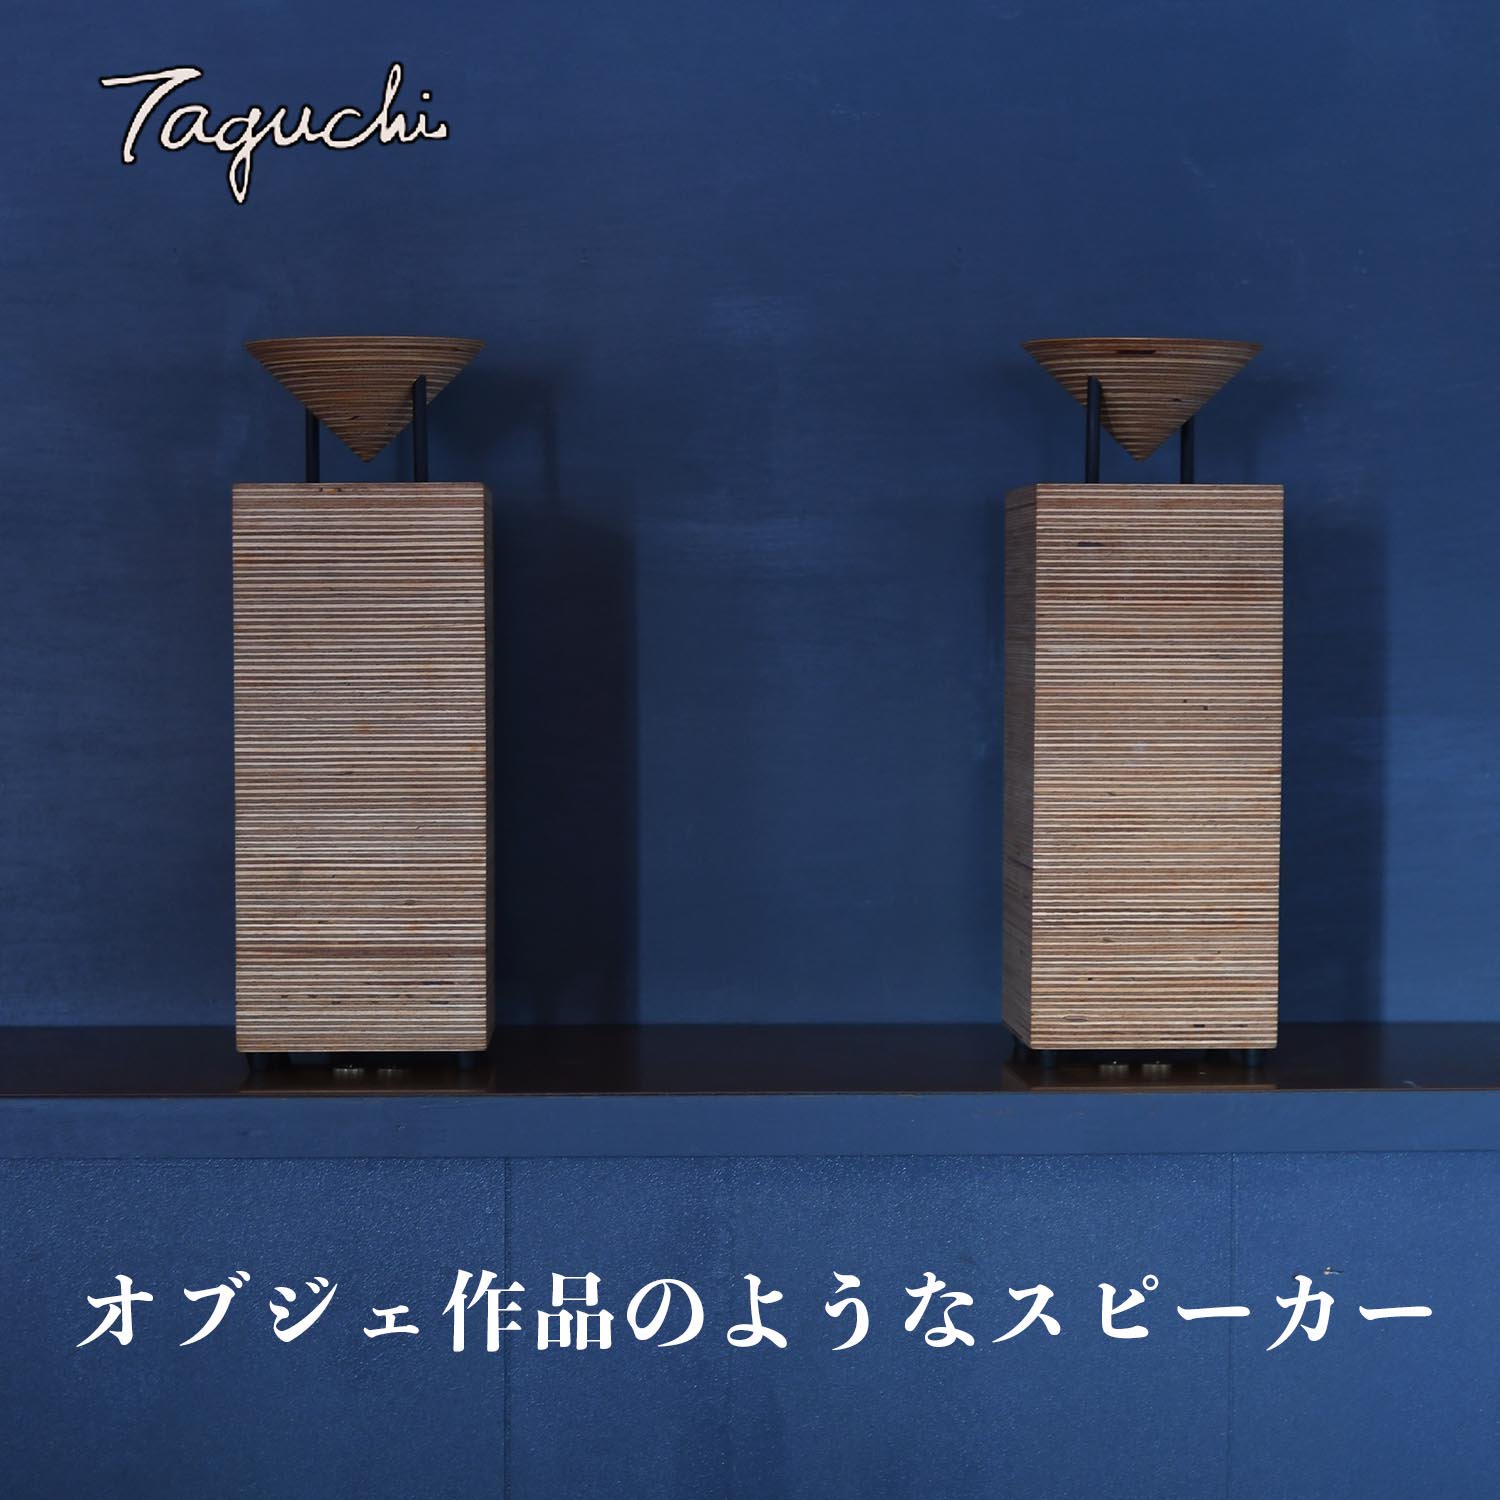 LITTLE BEL（Taguchiスピーカー／made in japan）| CAMWACCAネットショップ